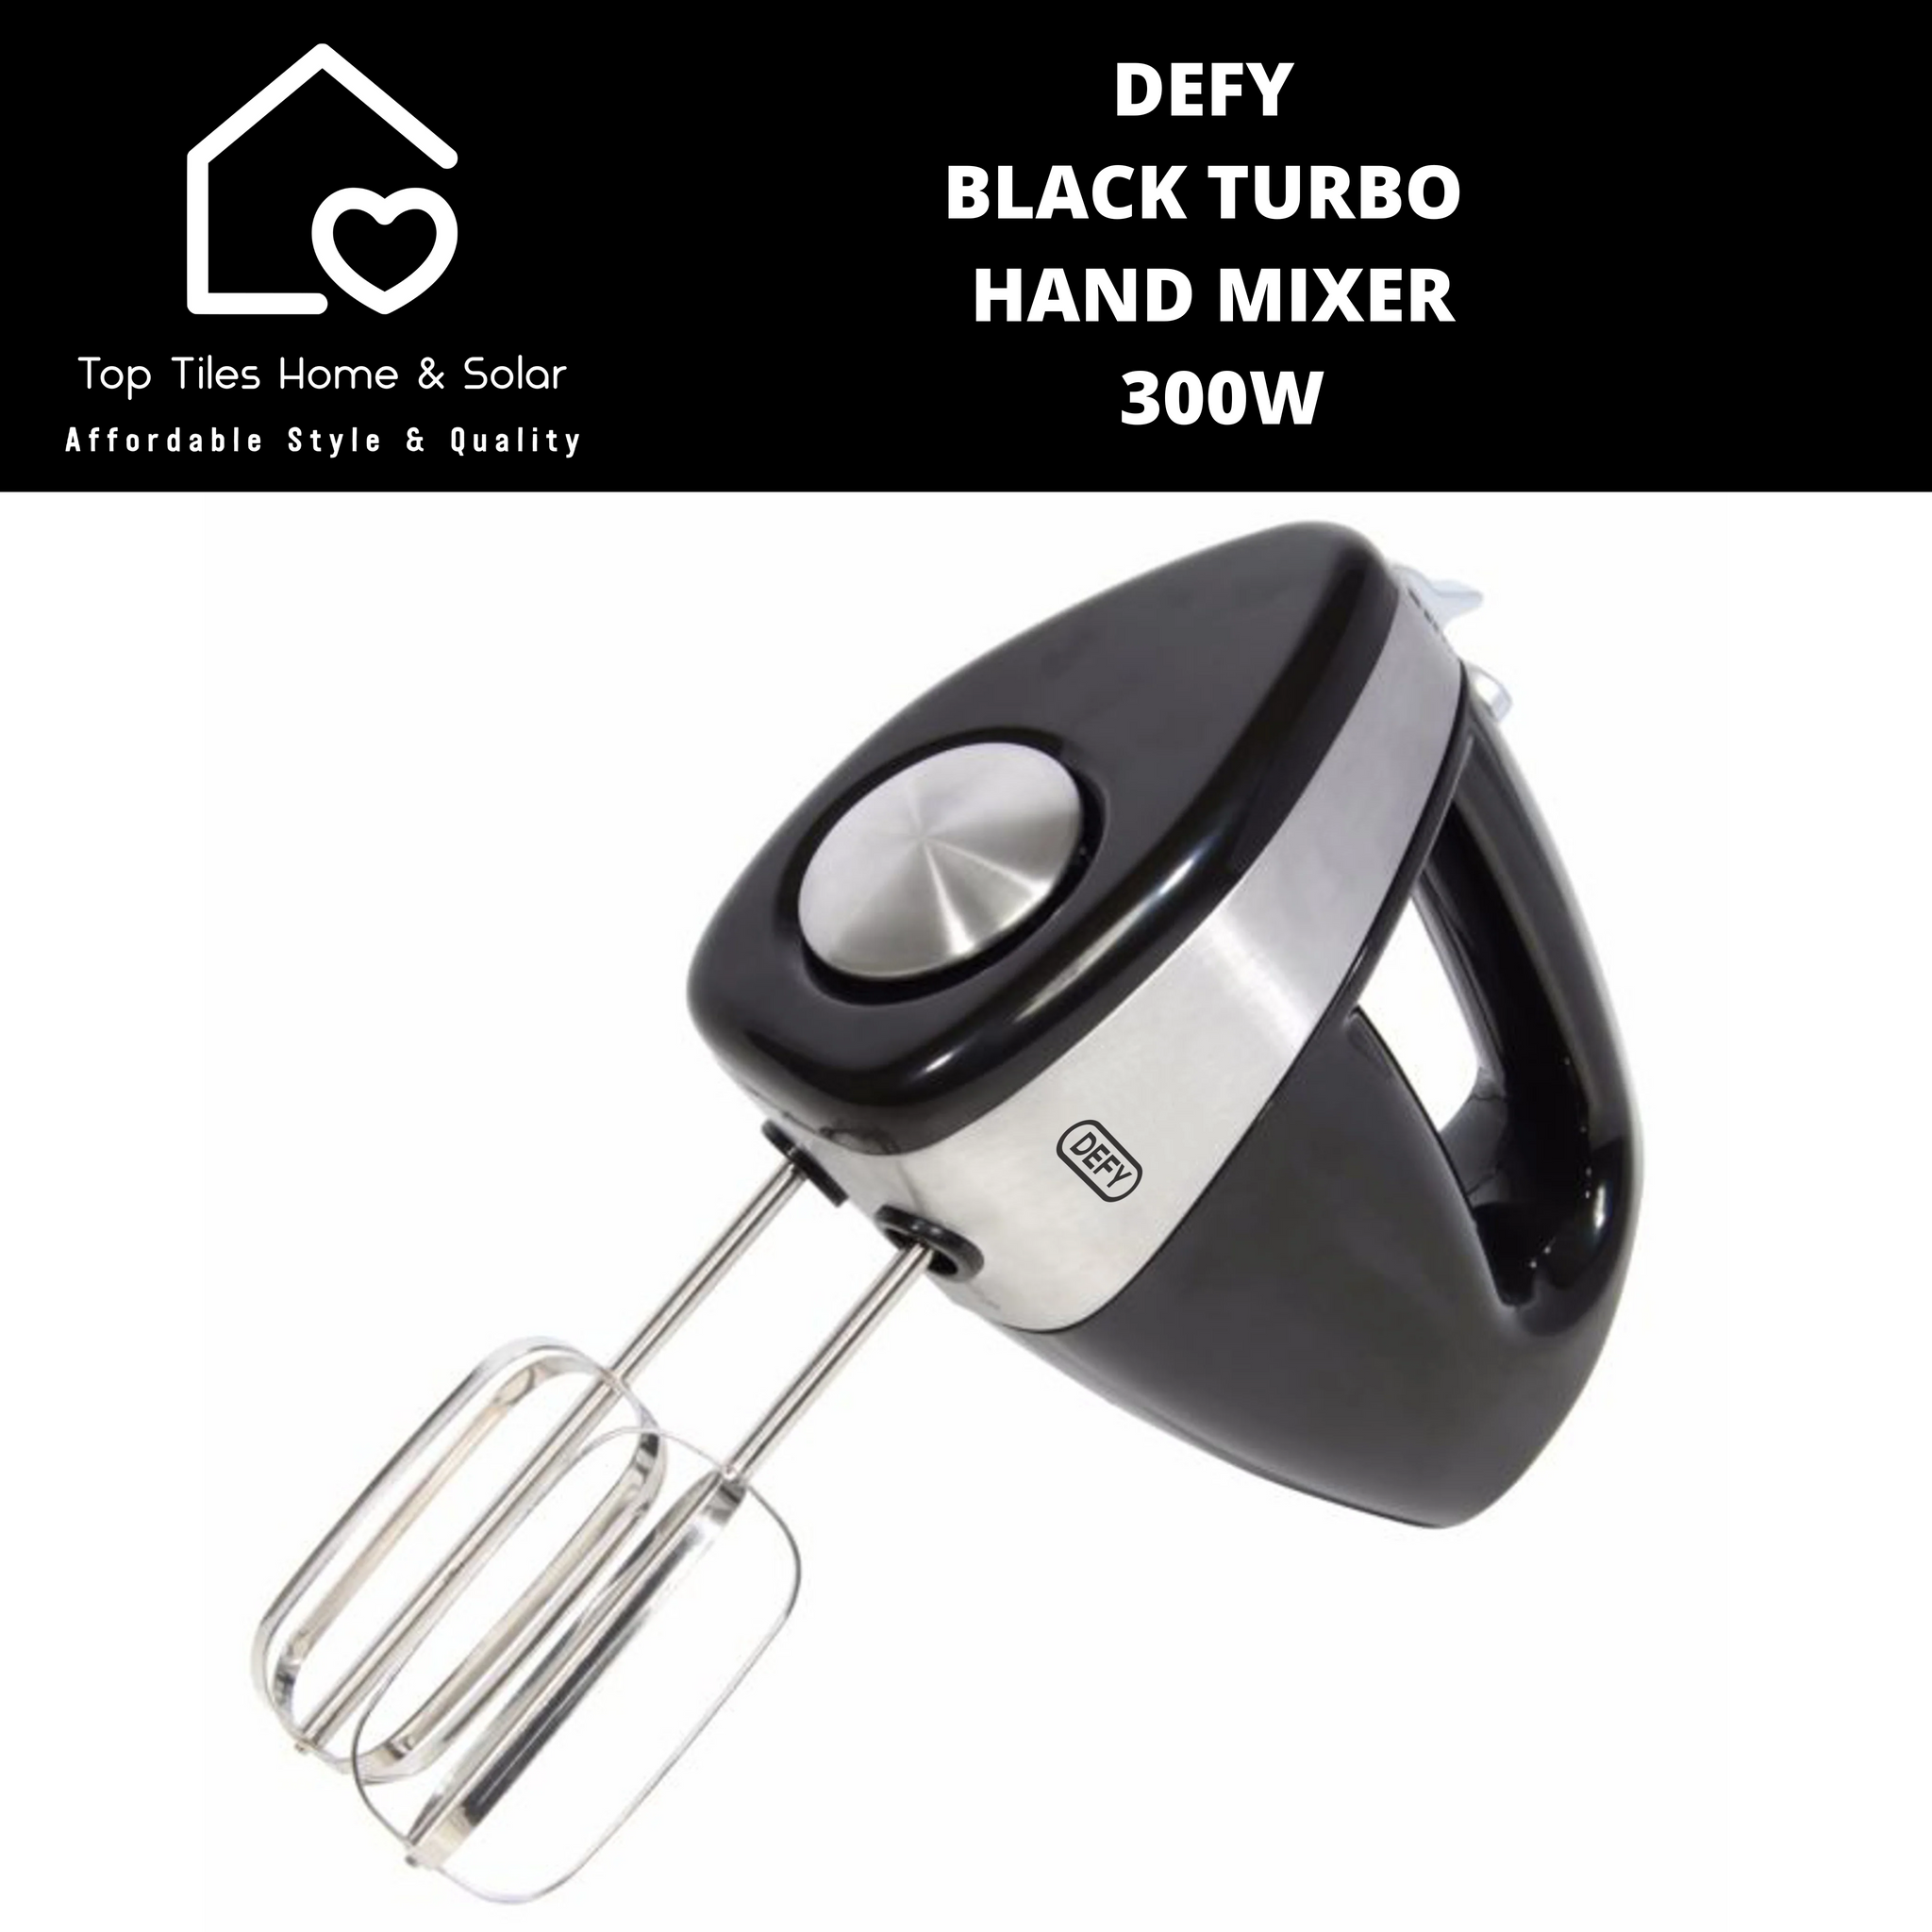 Defy Black Turbo Hand Mixer - 300W HM5040B – Top Tiles Home & Solar